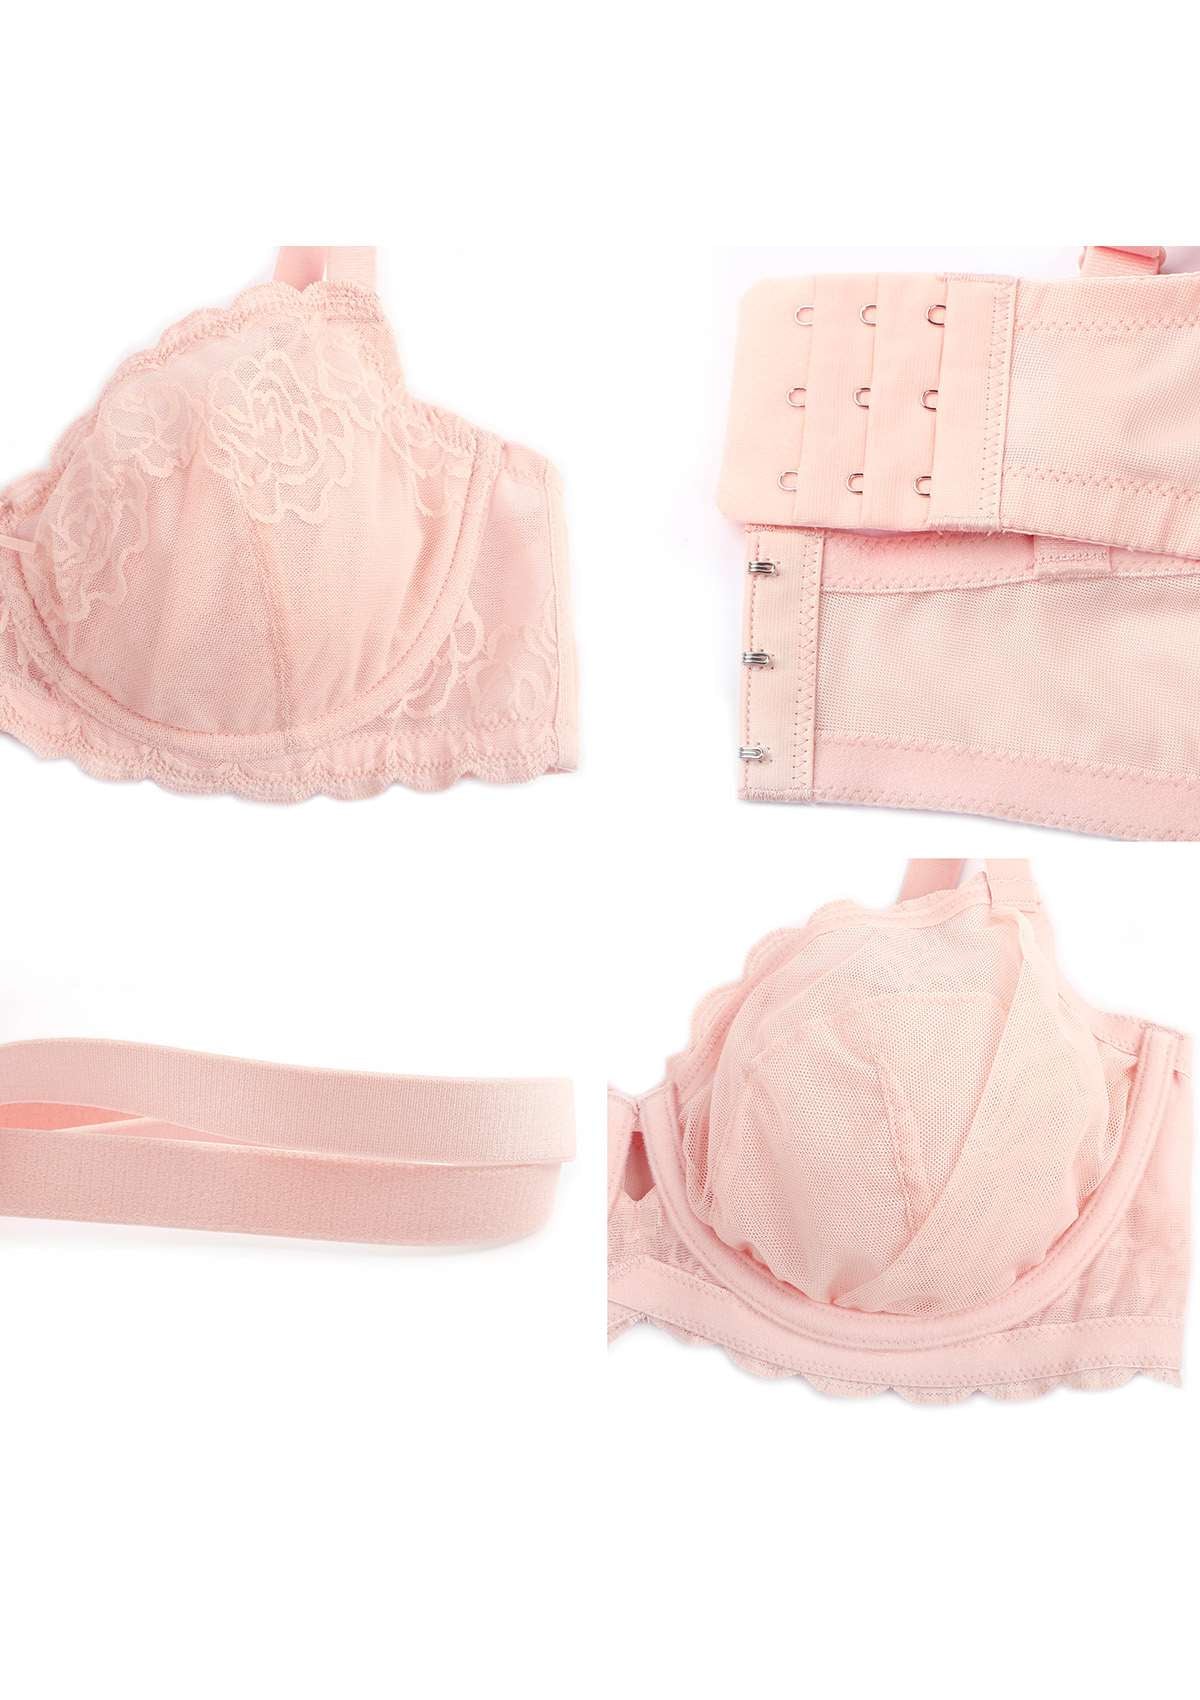 HSIA Rosa Bonica Sheer Lace Mesh Unlined Thin Comfy Woman Bra - Pink / 40 / DD/E